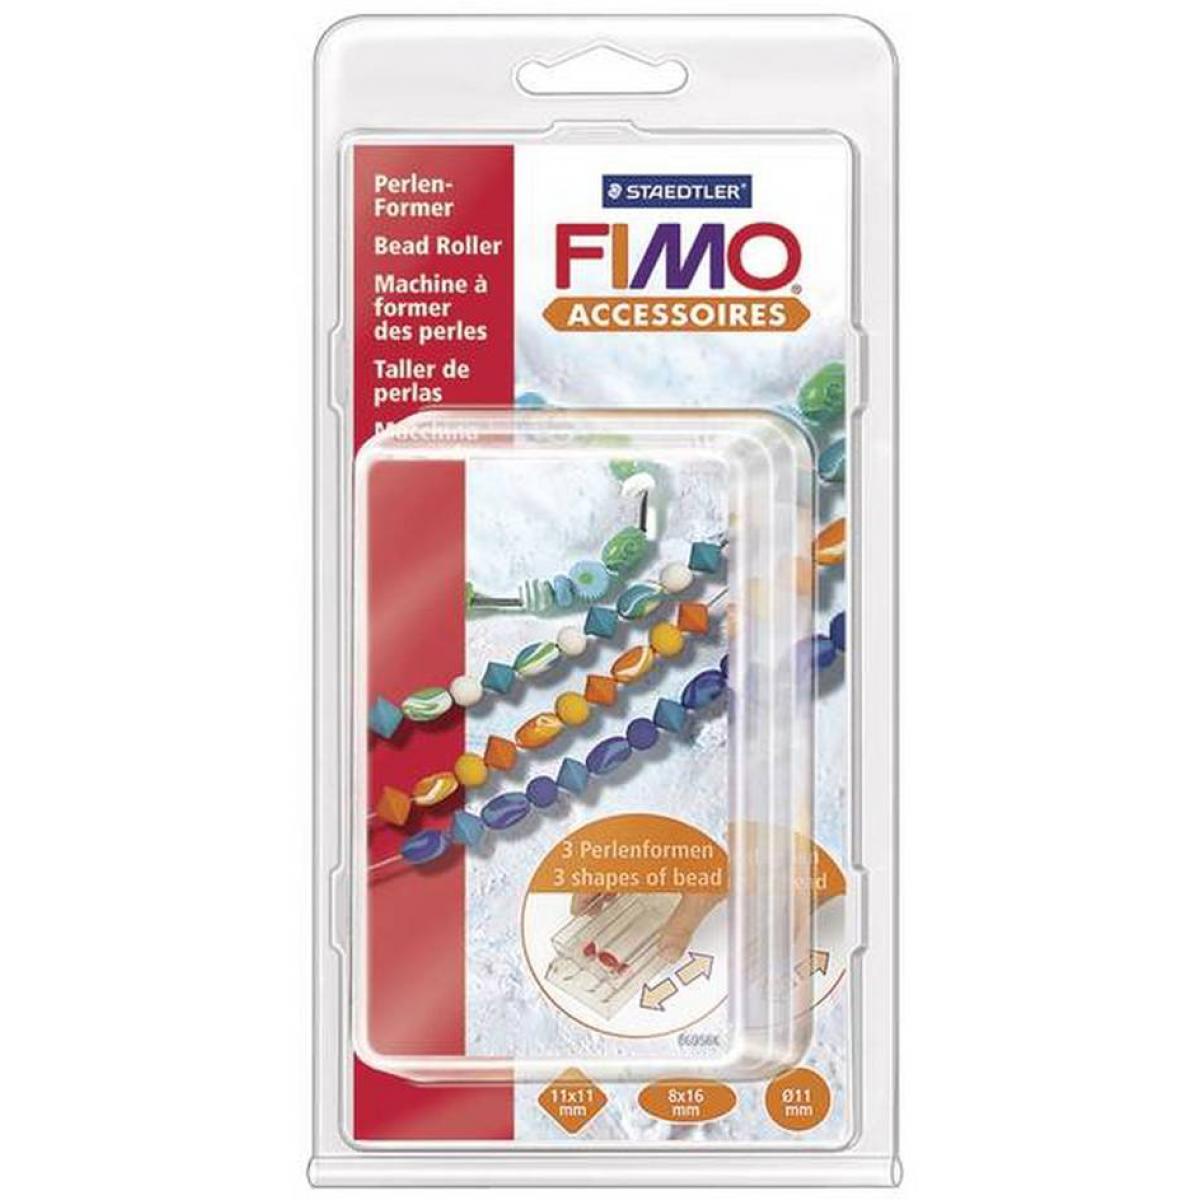 Fimo - Mouleur de perle Fimo Magic roller basique - Fimo - Modelage